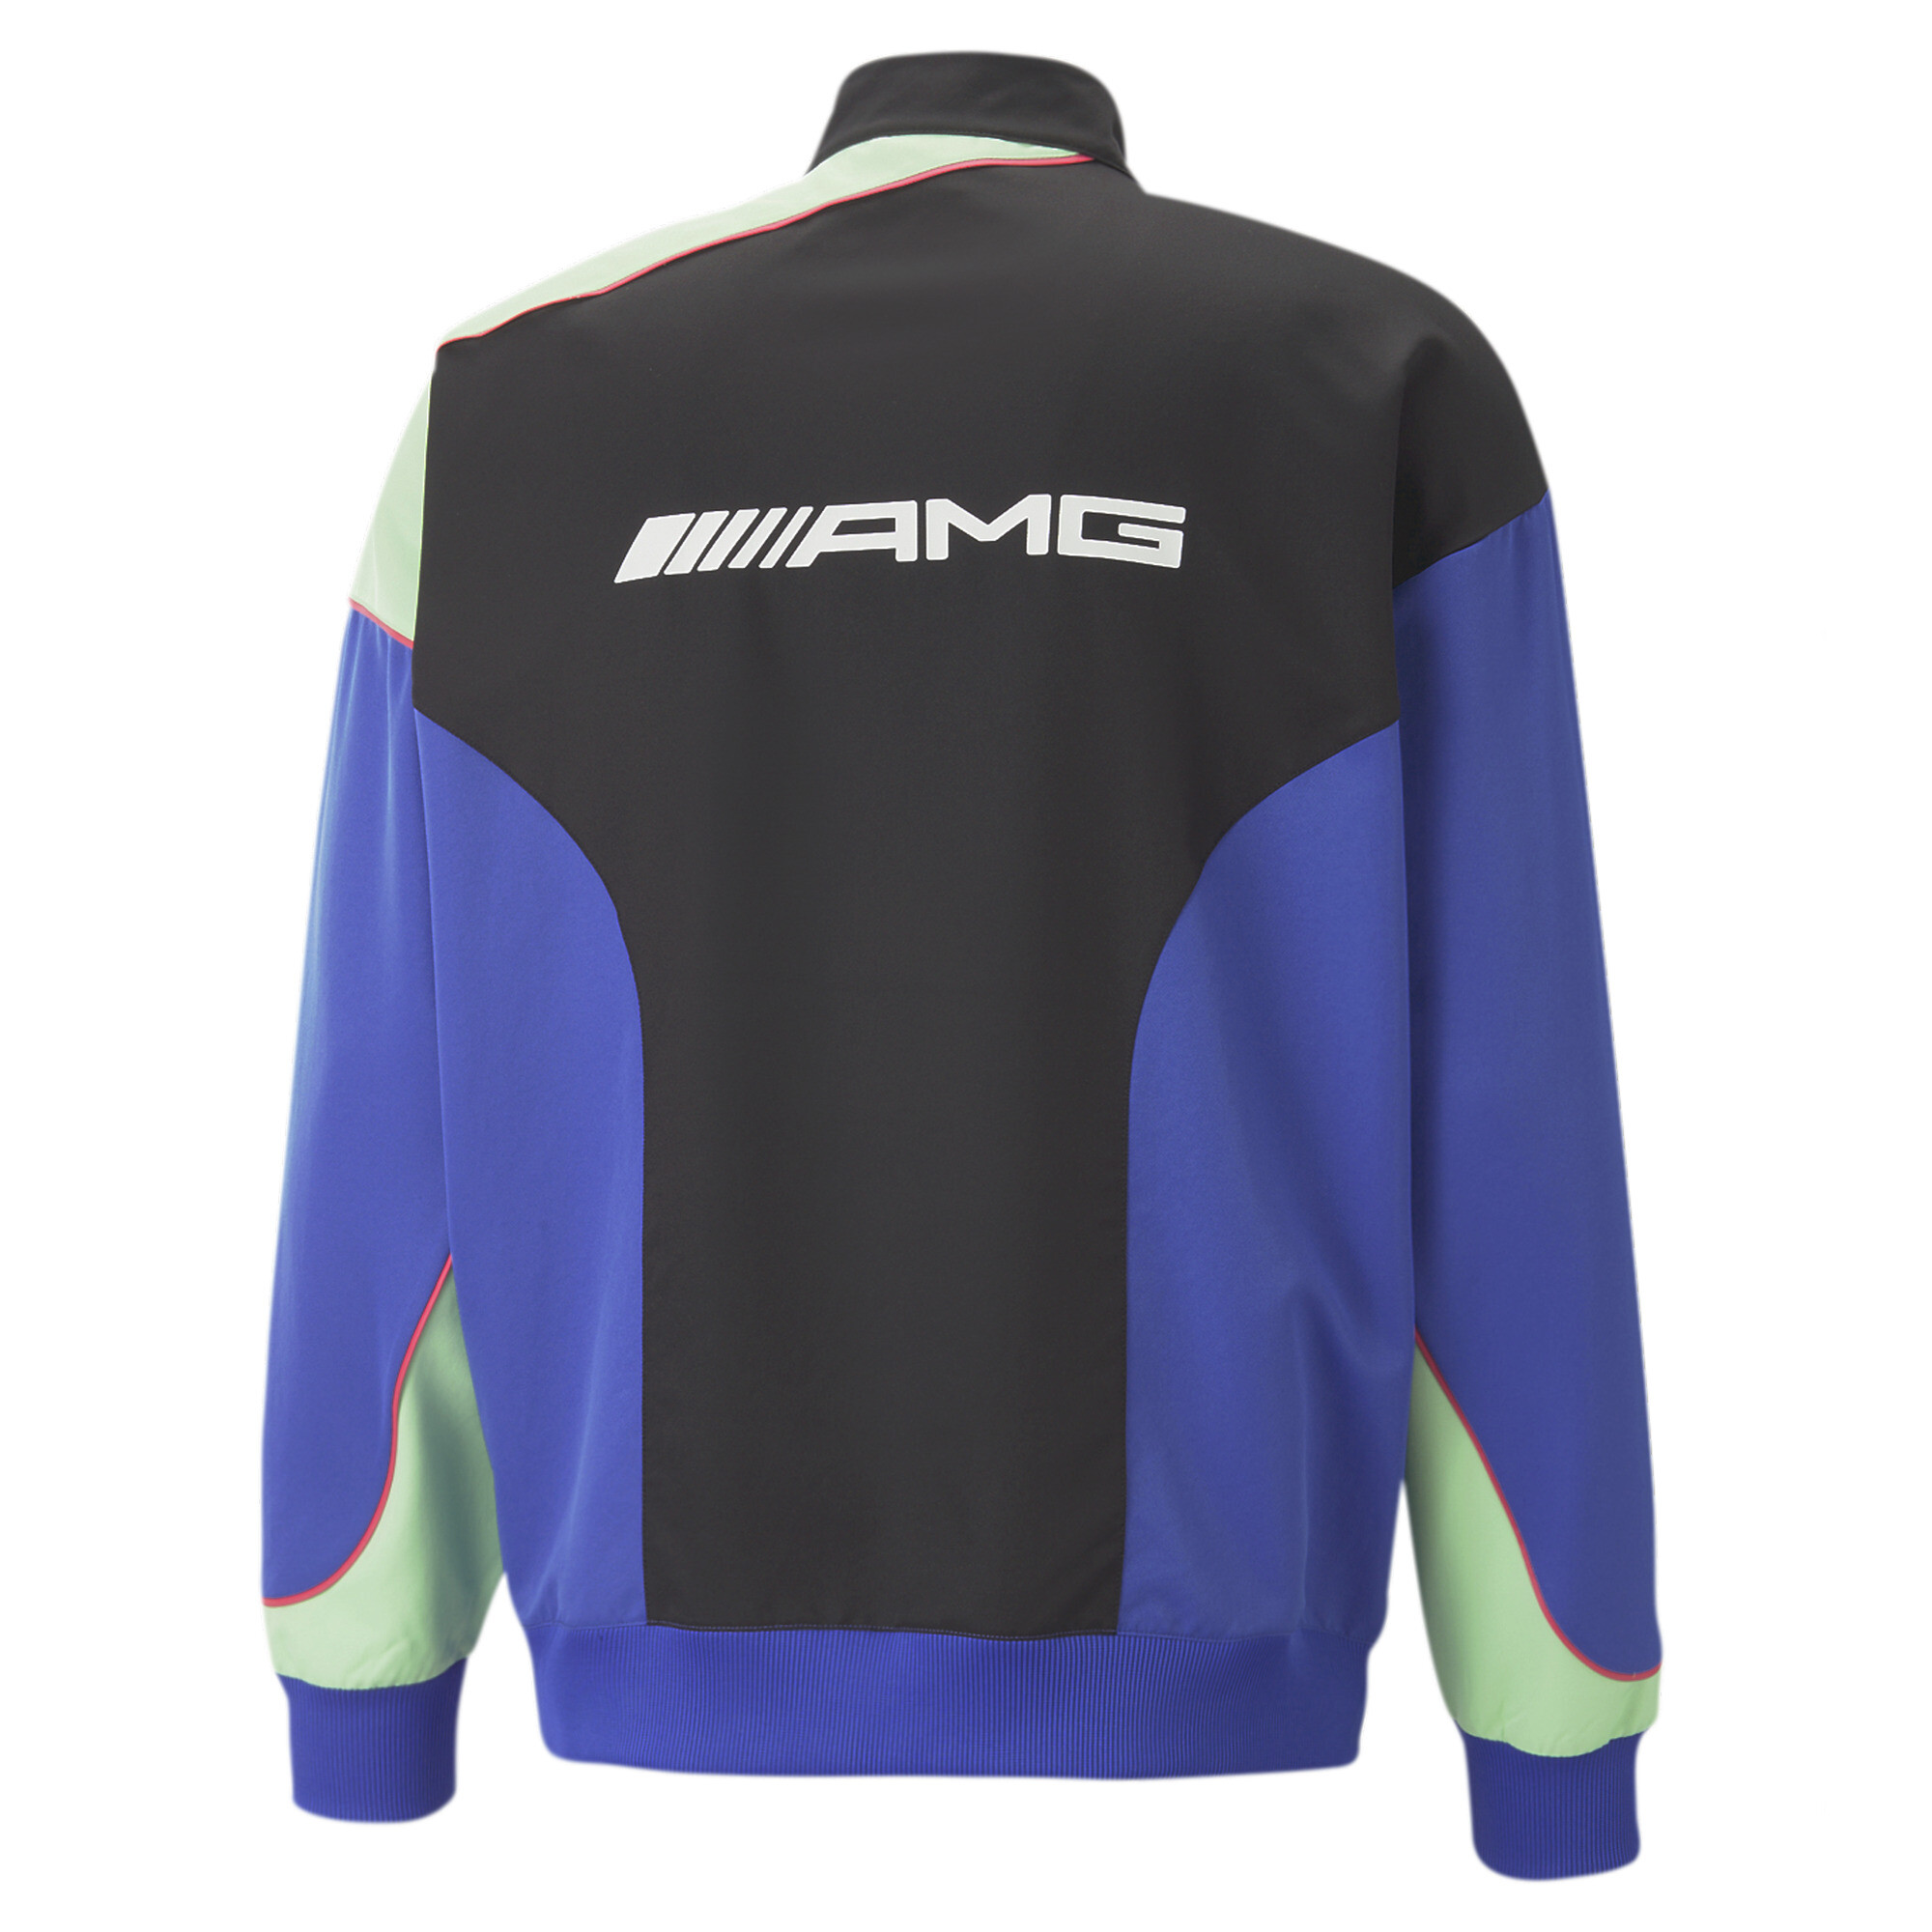 Men's PUMA Mercedes-AMG Motorsport Woven Jacket Men In Blue, Size Medium